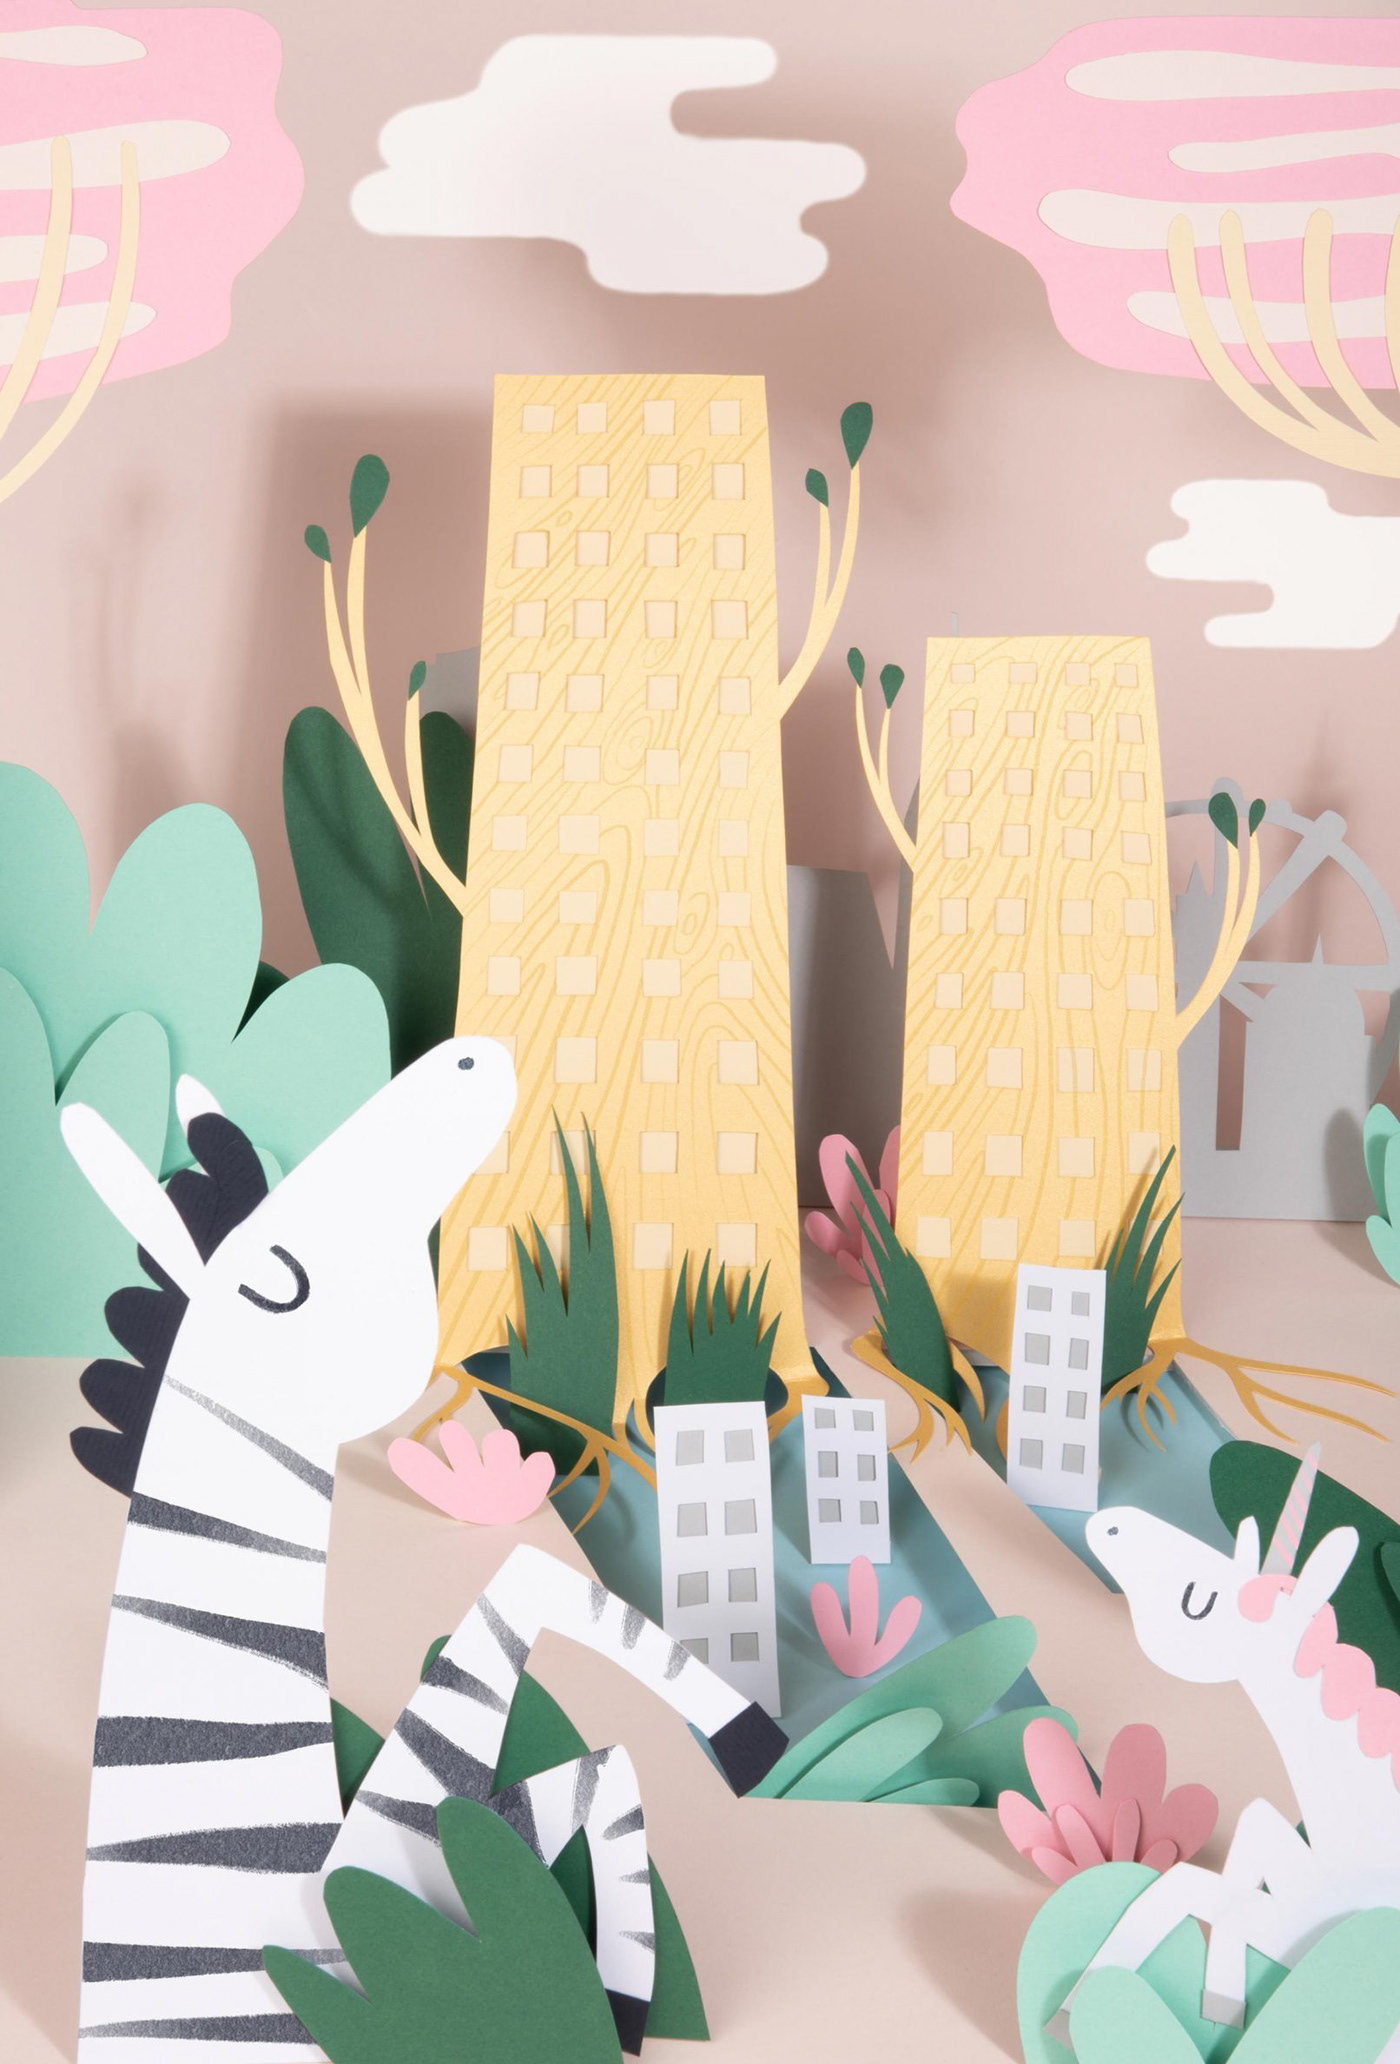 startups editorial illusrration wienerin zebras